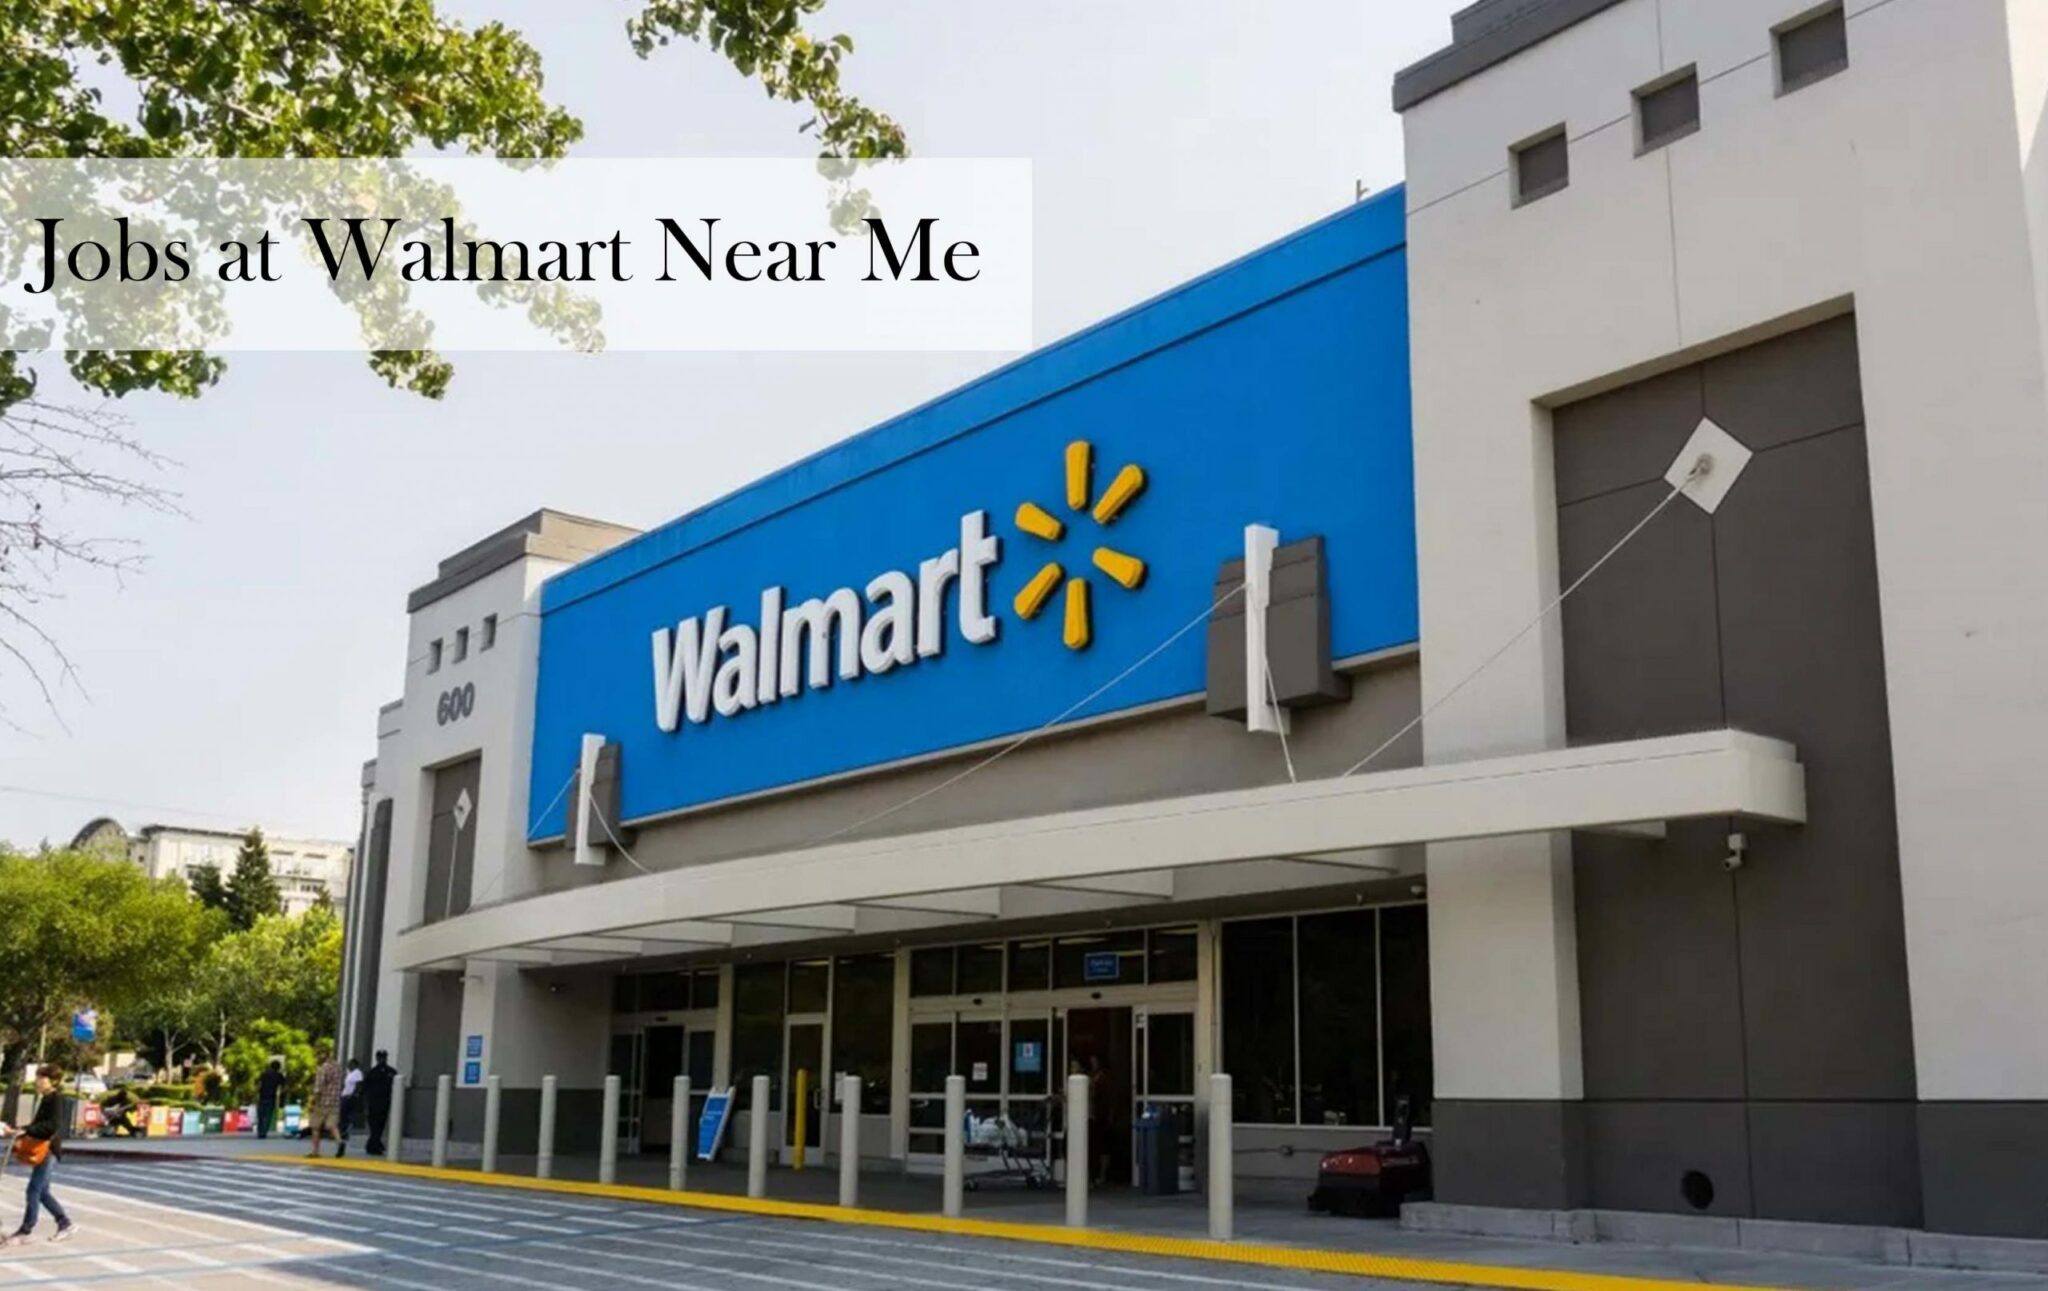 Jobs at Walmart Near Me - Positions Available at Walmart